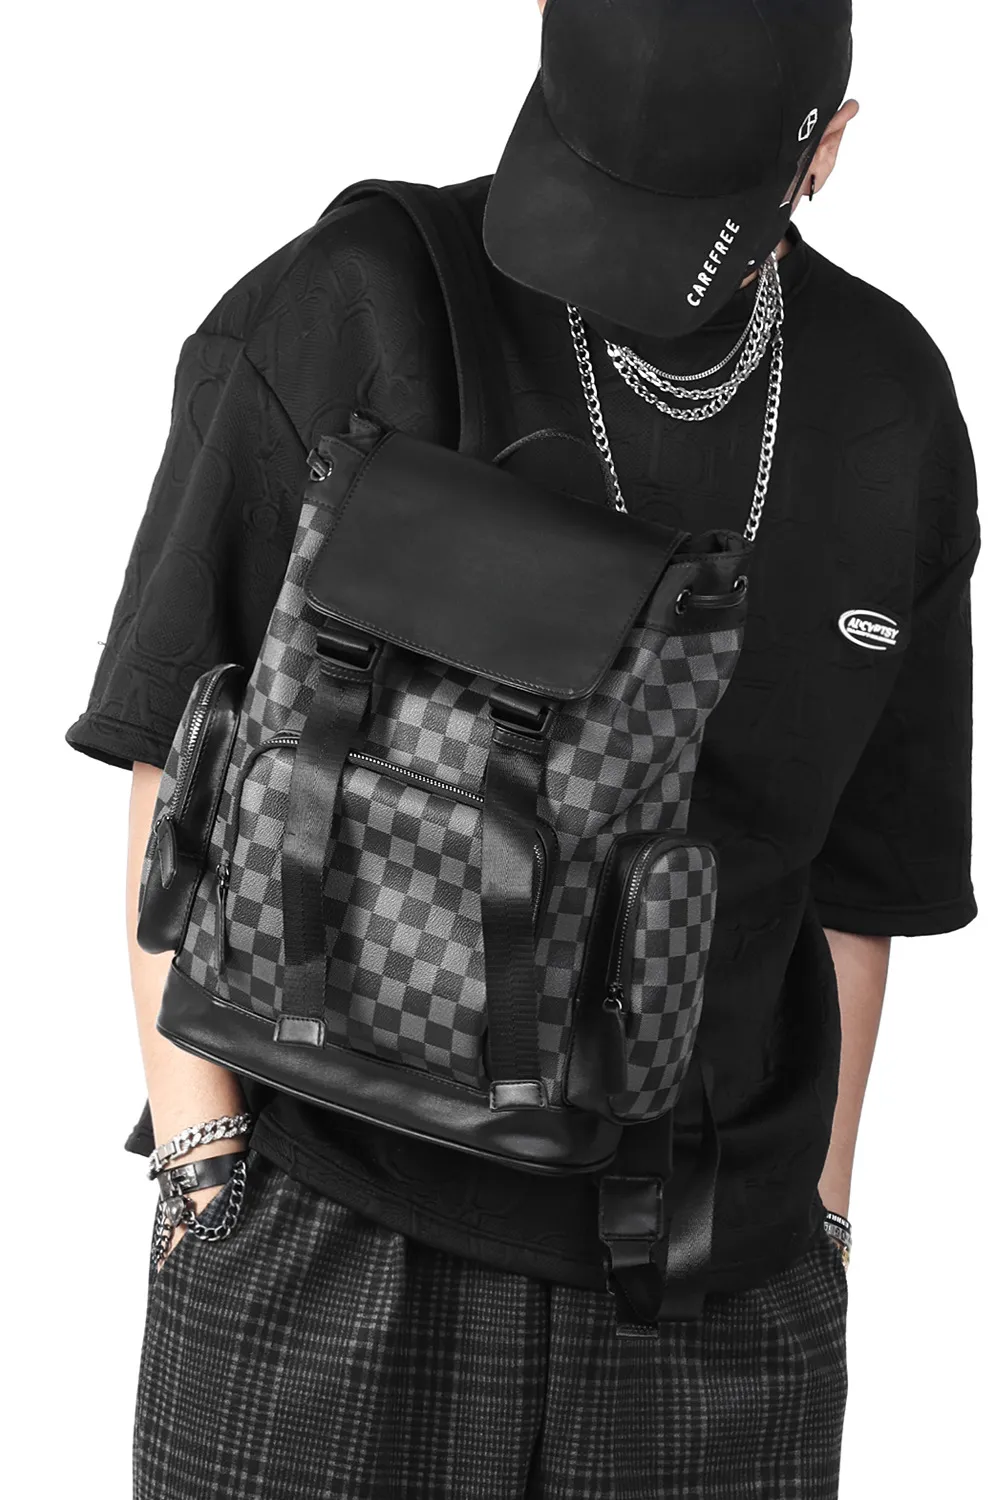 Luxury Men Large School Bags Capacity Leather Backpacks Fashion Anti-theft handbag Girls boys High Quality Women's Travel Bags